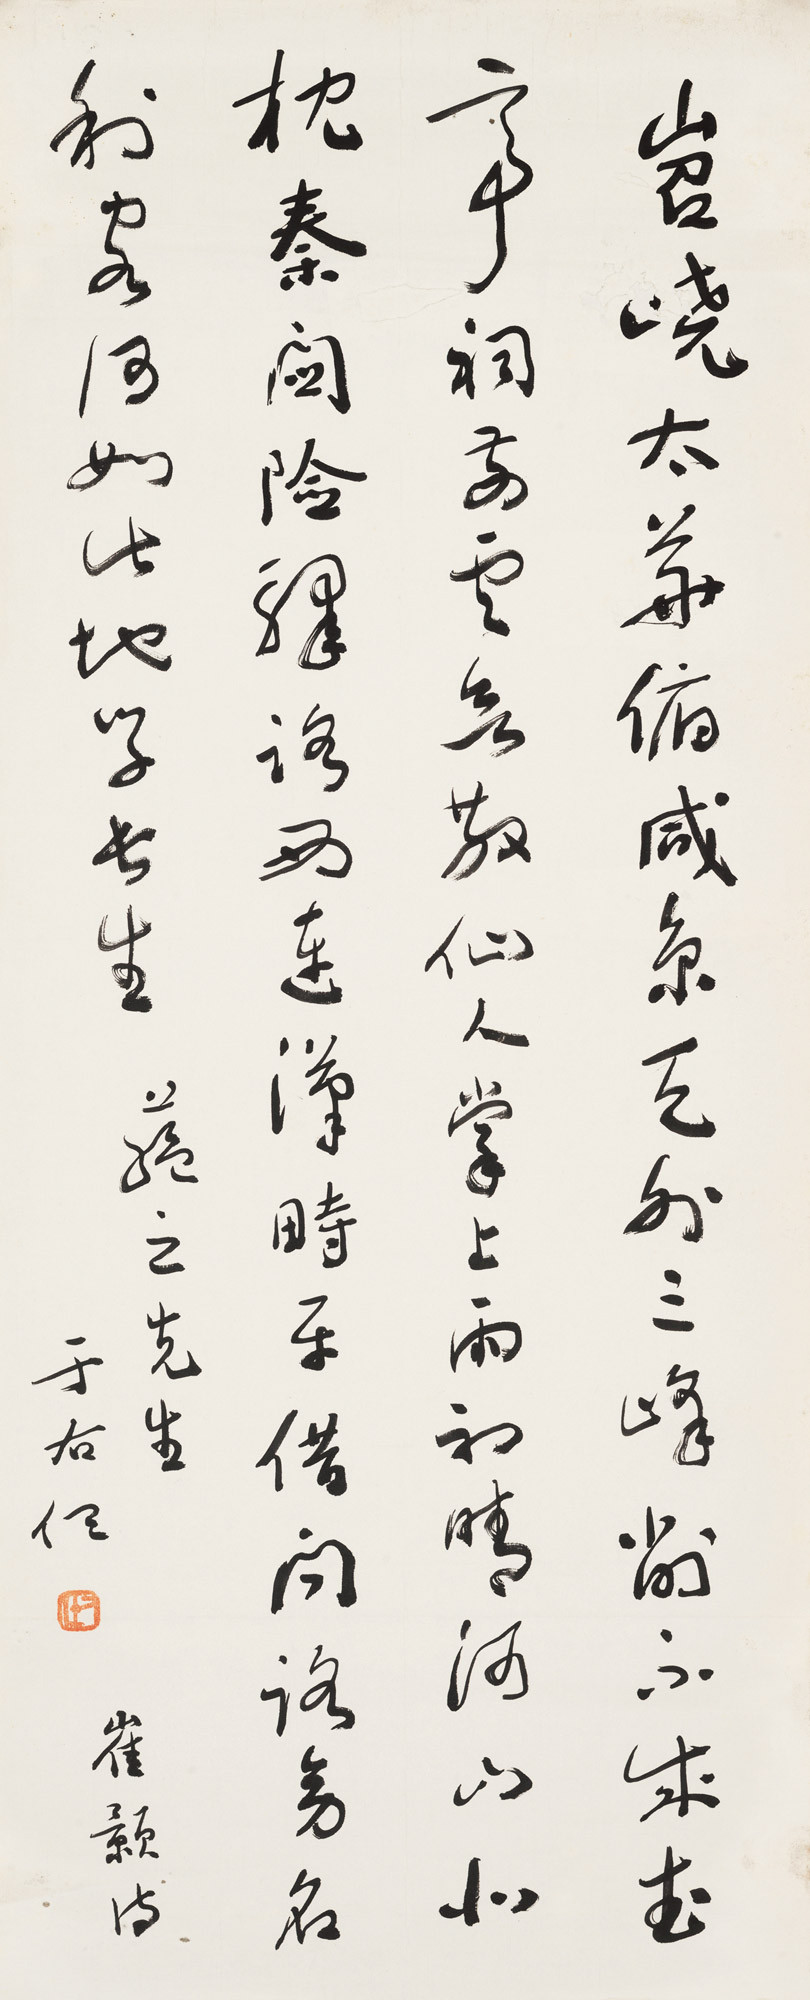 Calligraphy In Cursive Script